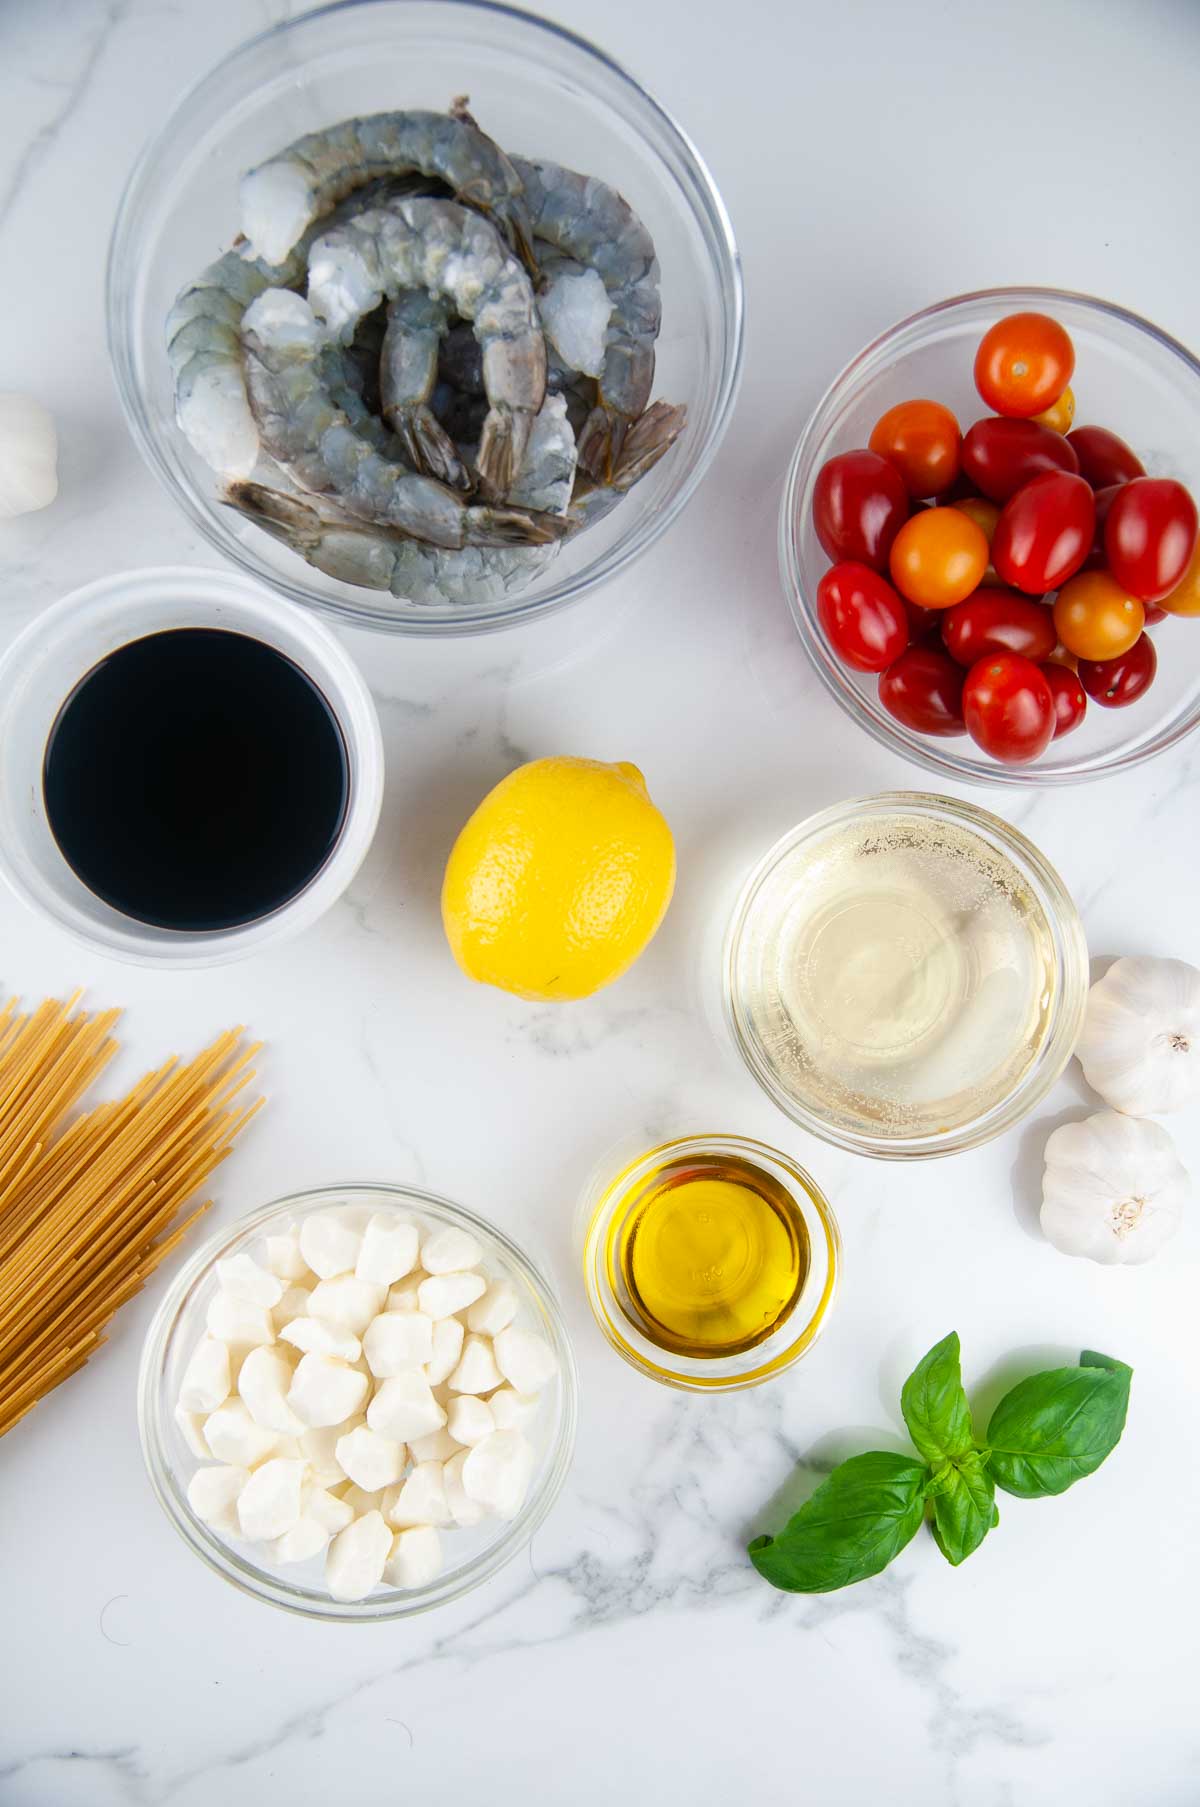 Ingredients for shrimp caprese pasta: shrimp, tomatoes, balsamic vinegar, pasta, mozzarella, lemon juice, olive oil, white wine, garlic, basil